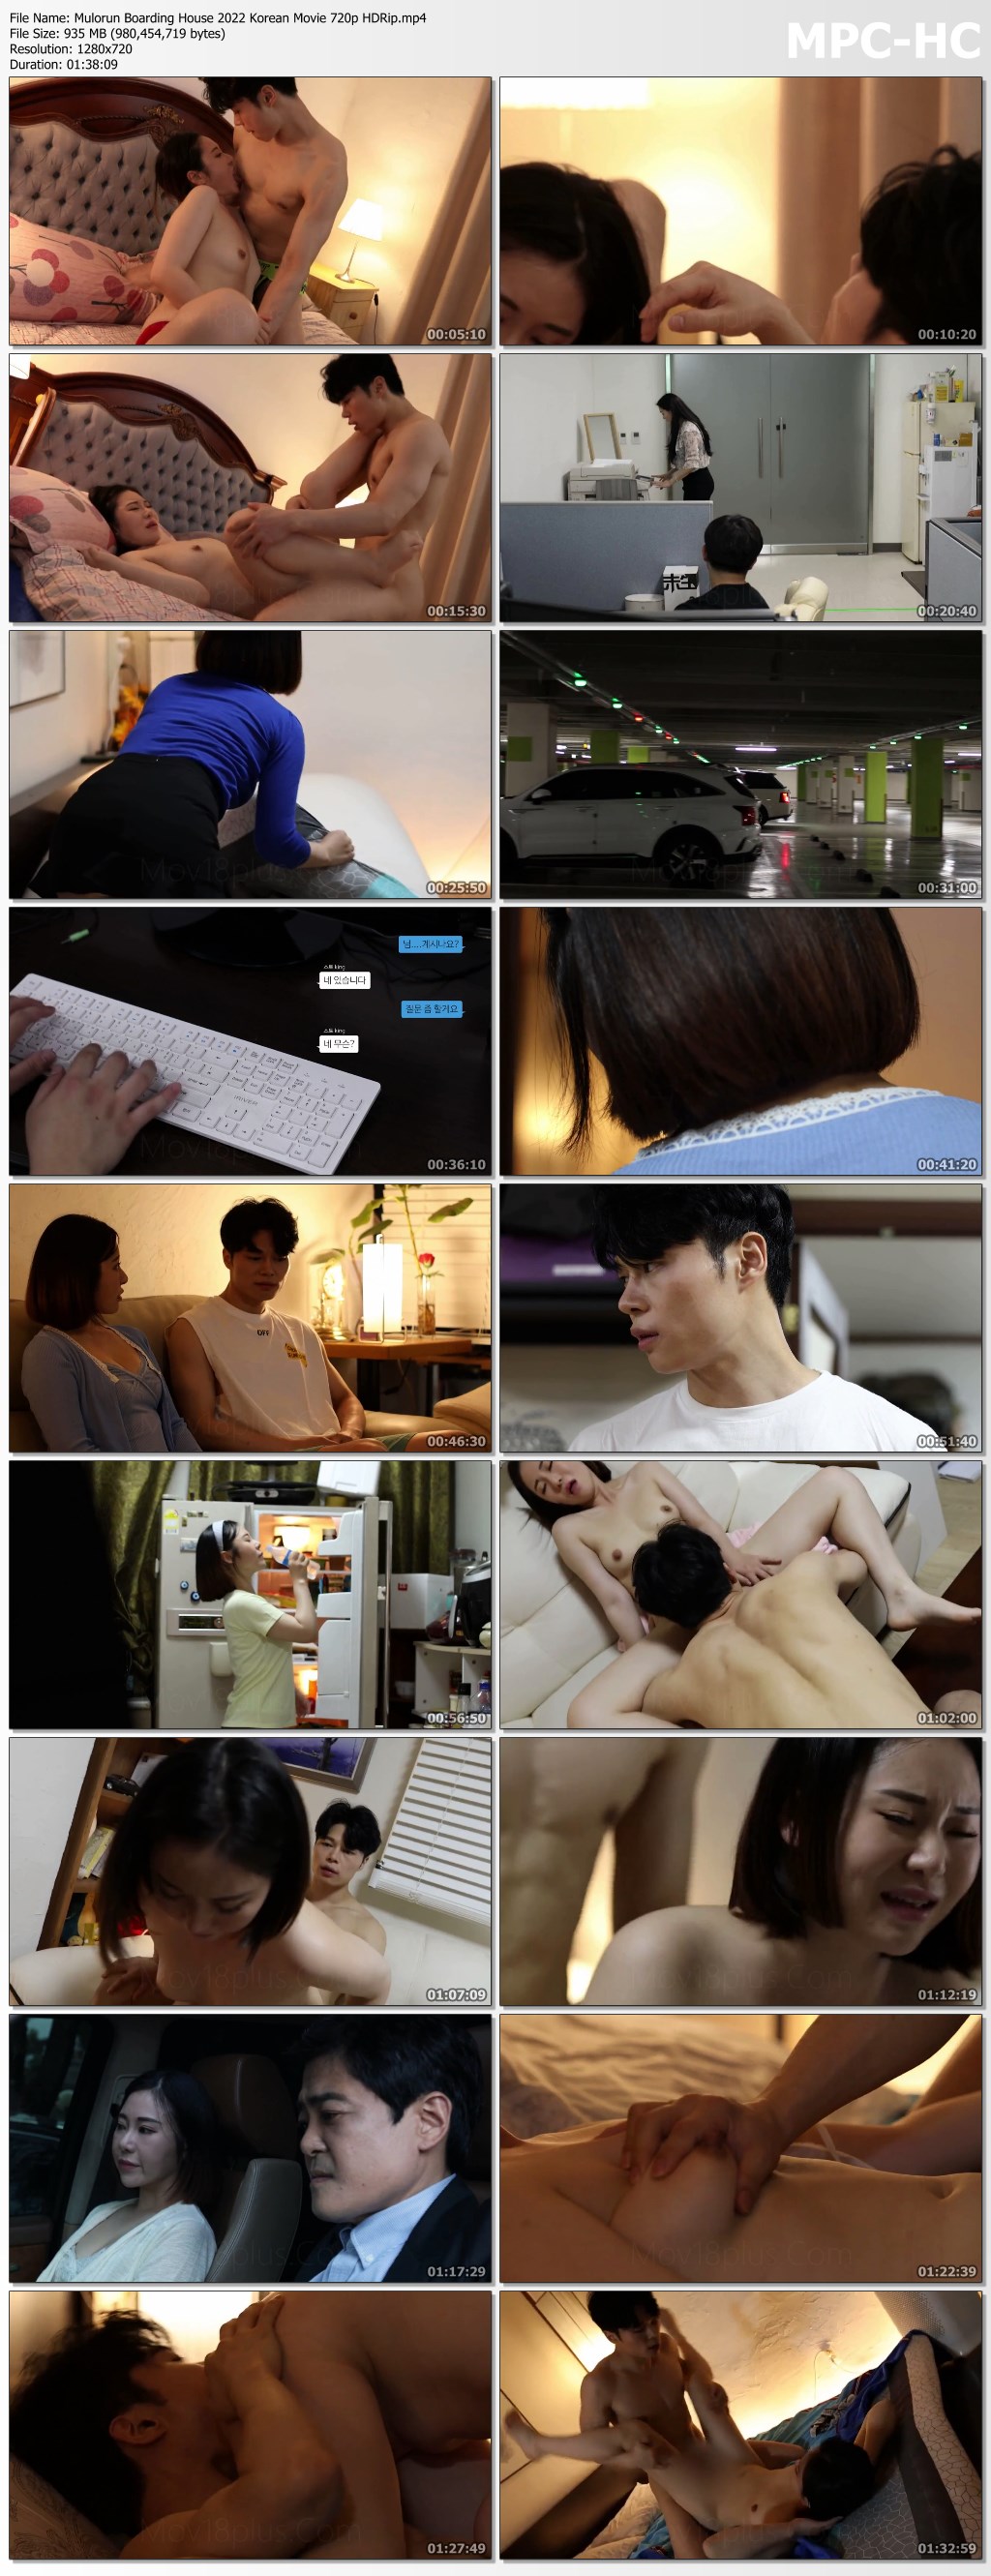 Mulorun-Boarding-House-2022-Korean-Movie-720p-HDRip.mp4_thumbs.jpg